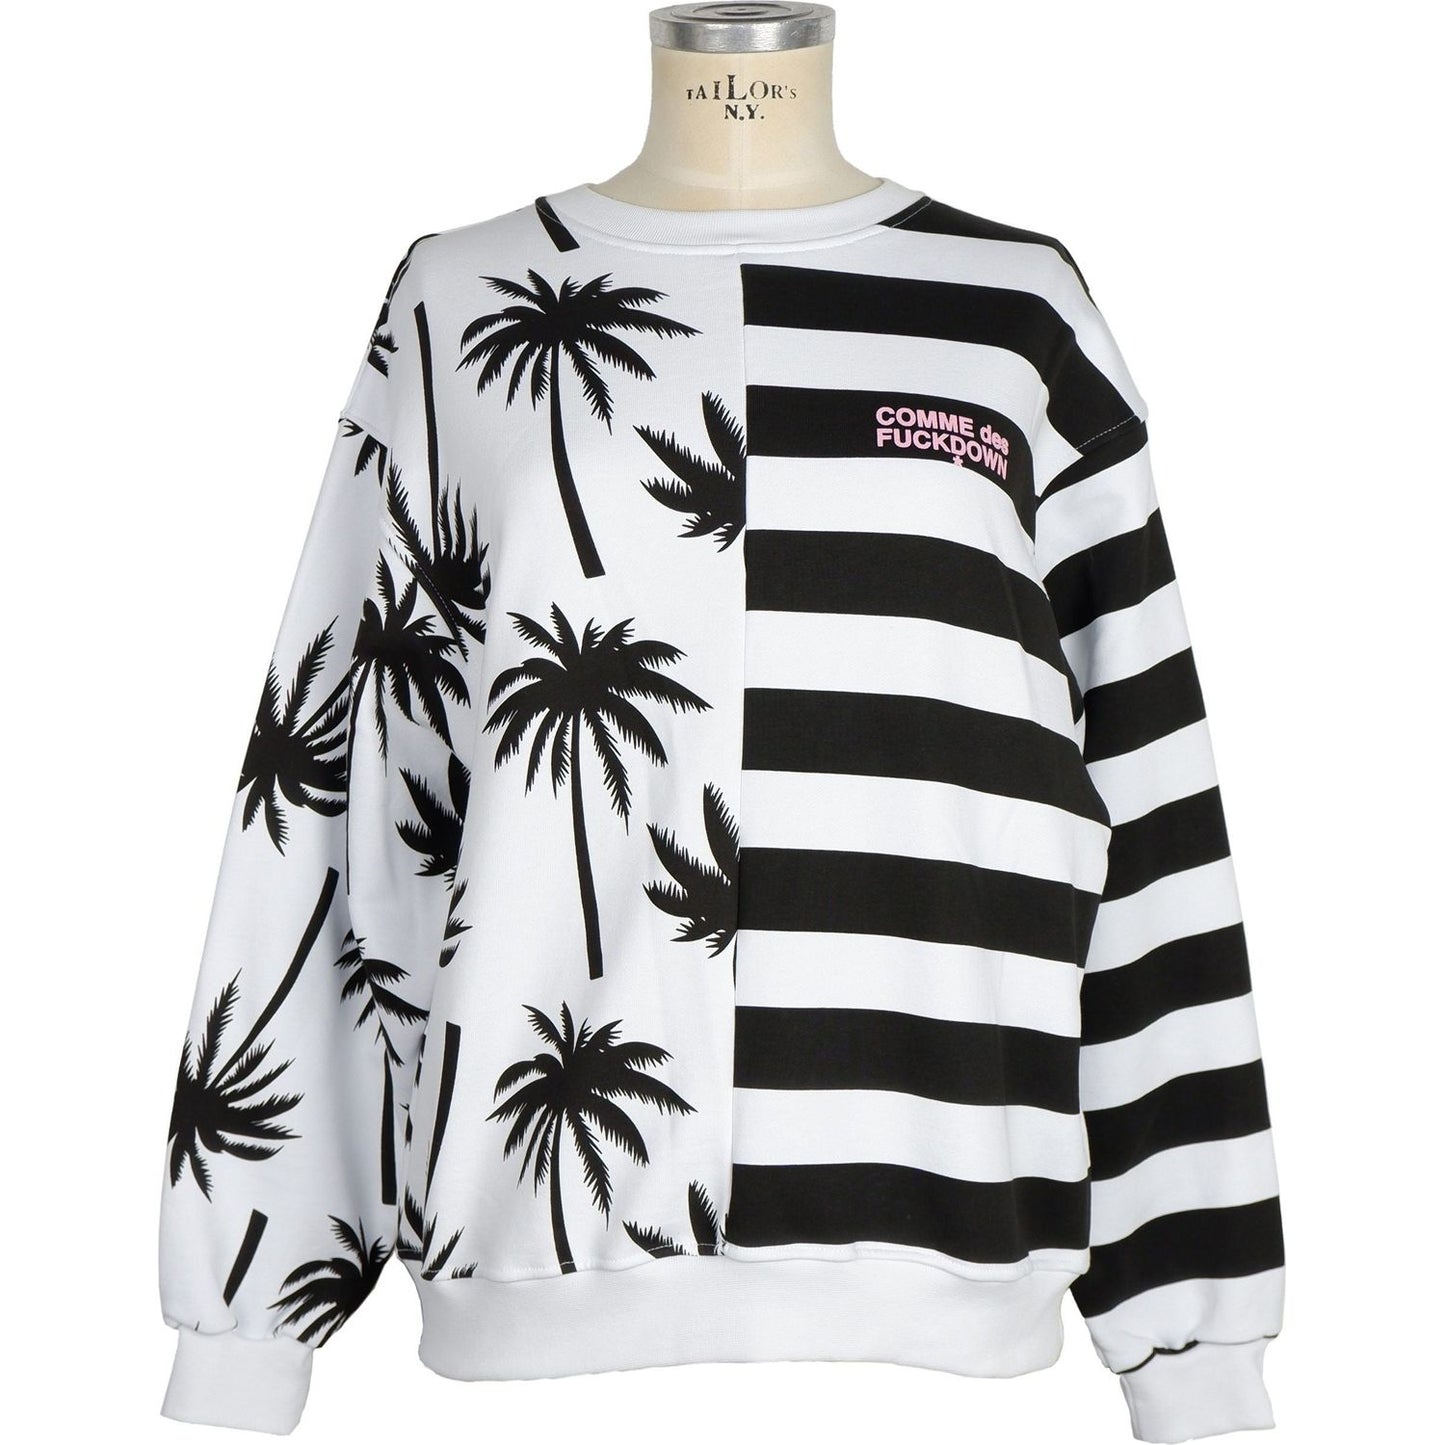 Comme Des Fuckdown Chic Monochrome Stripe Palm Print Sweater black-cotton-sweater-91